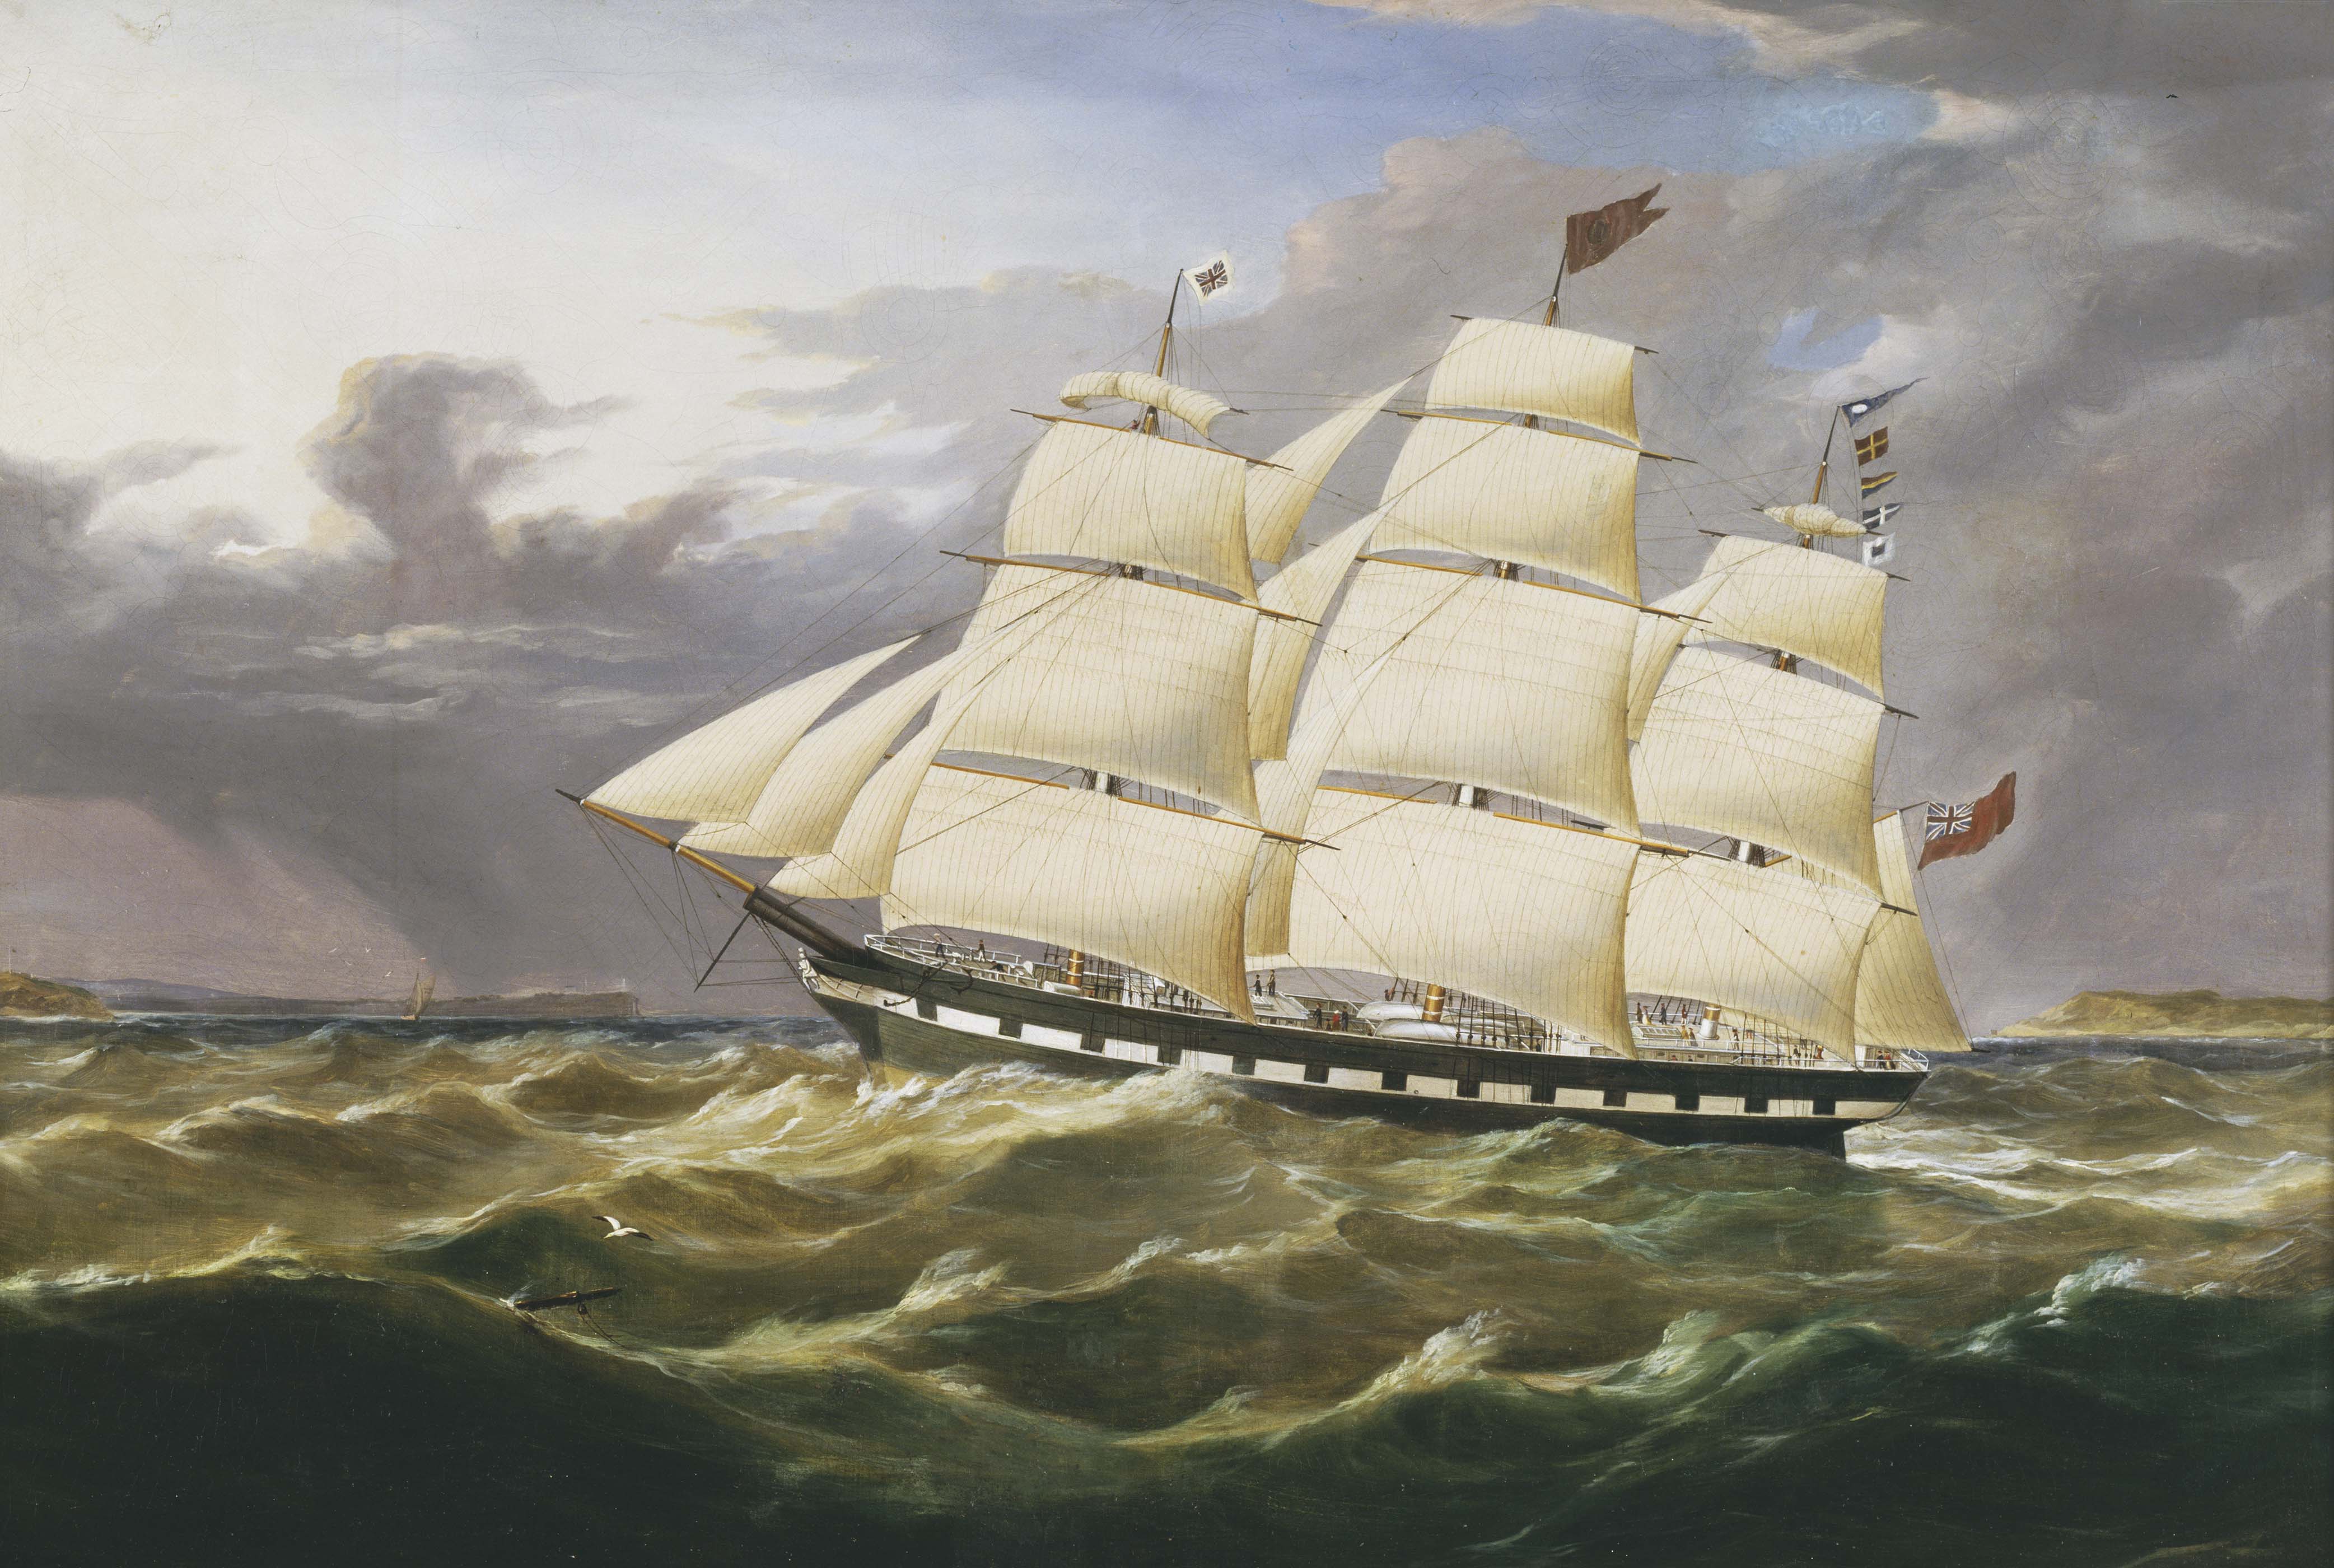 Marco Polo, by Thomas Robertson, 1859.